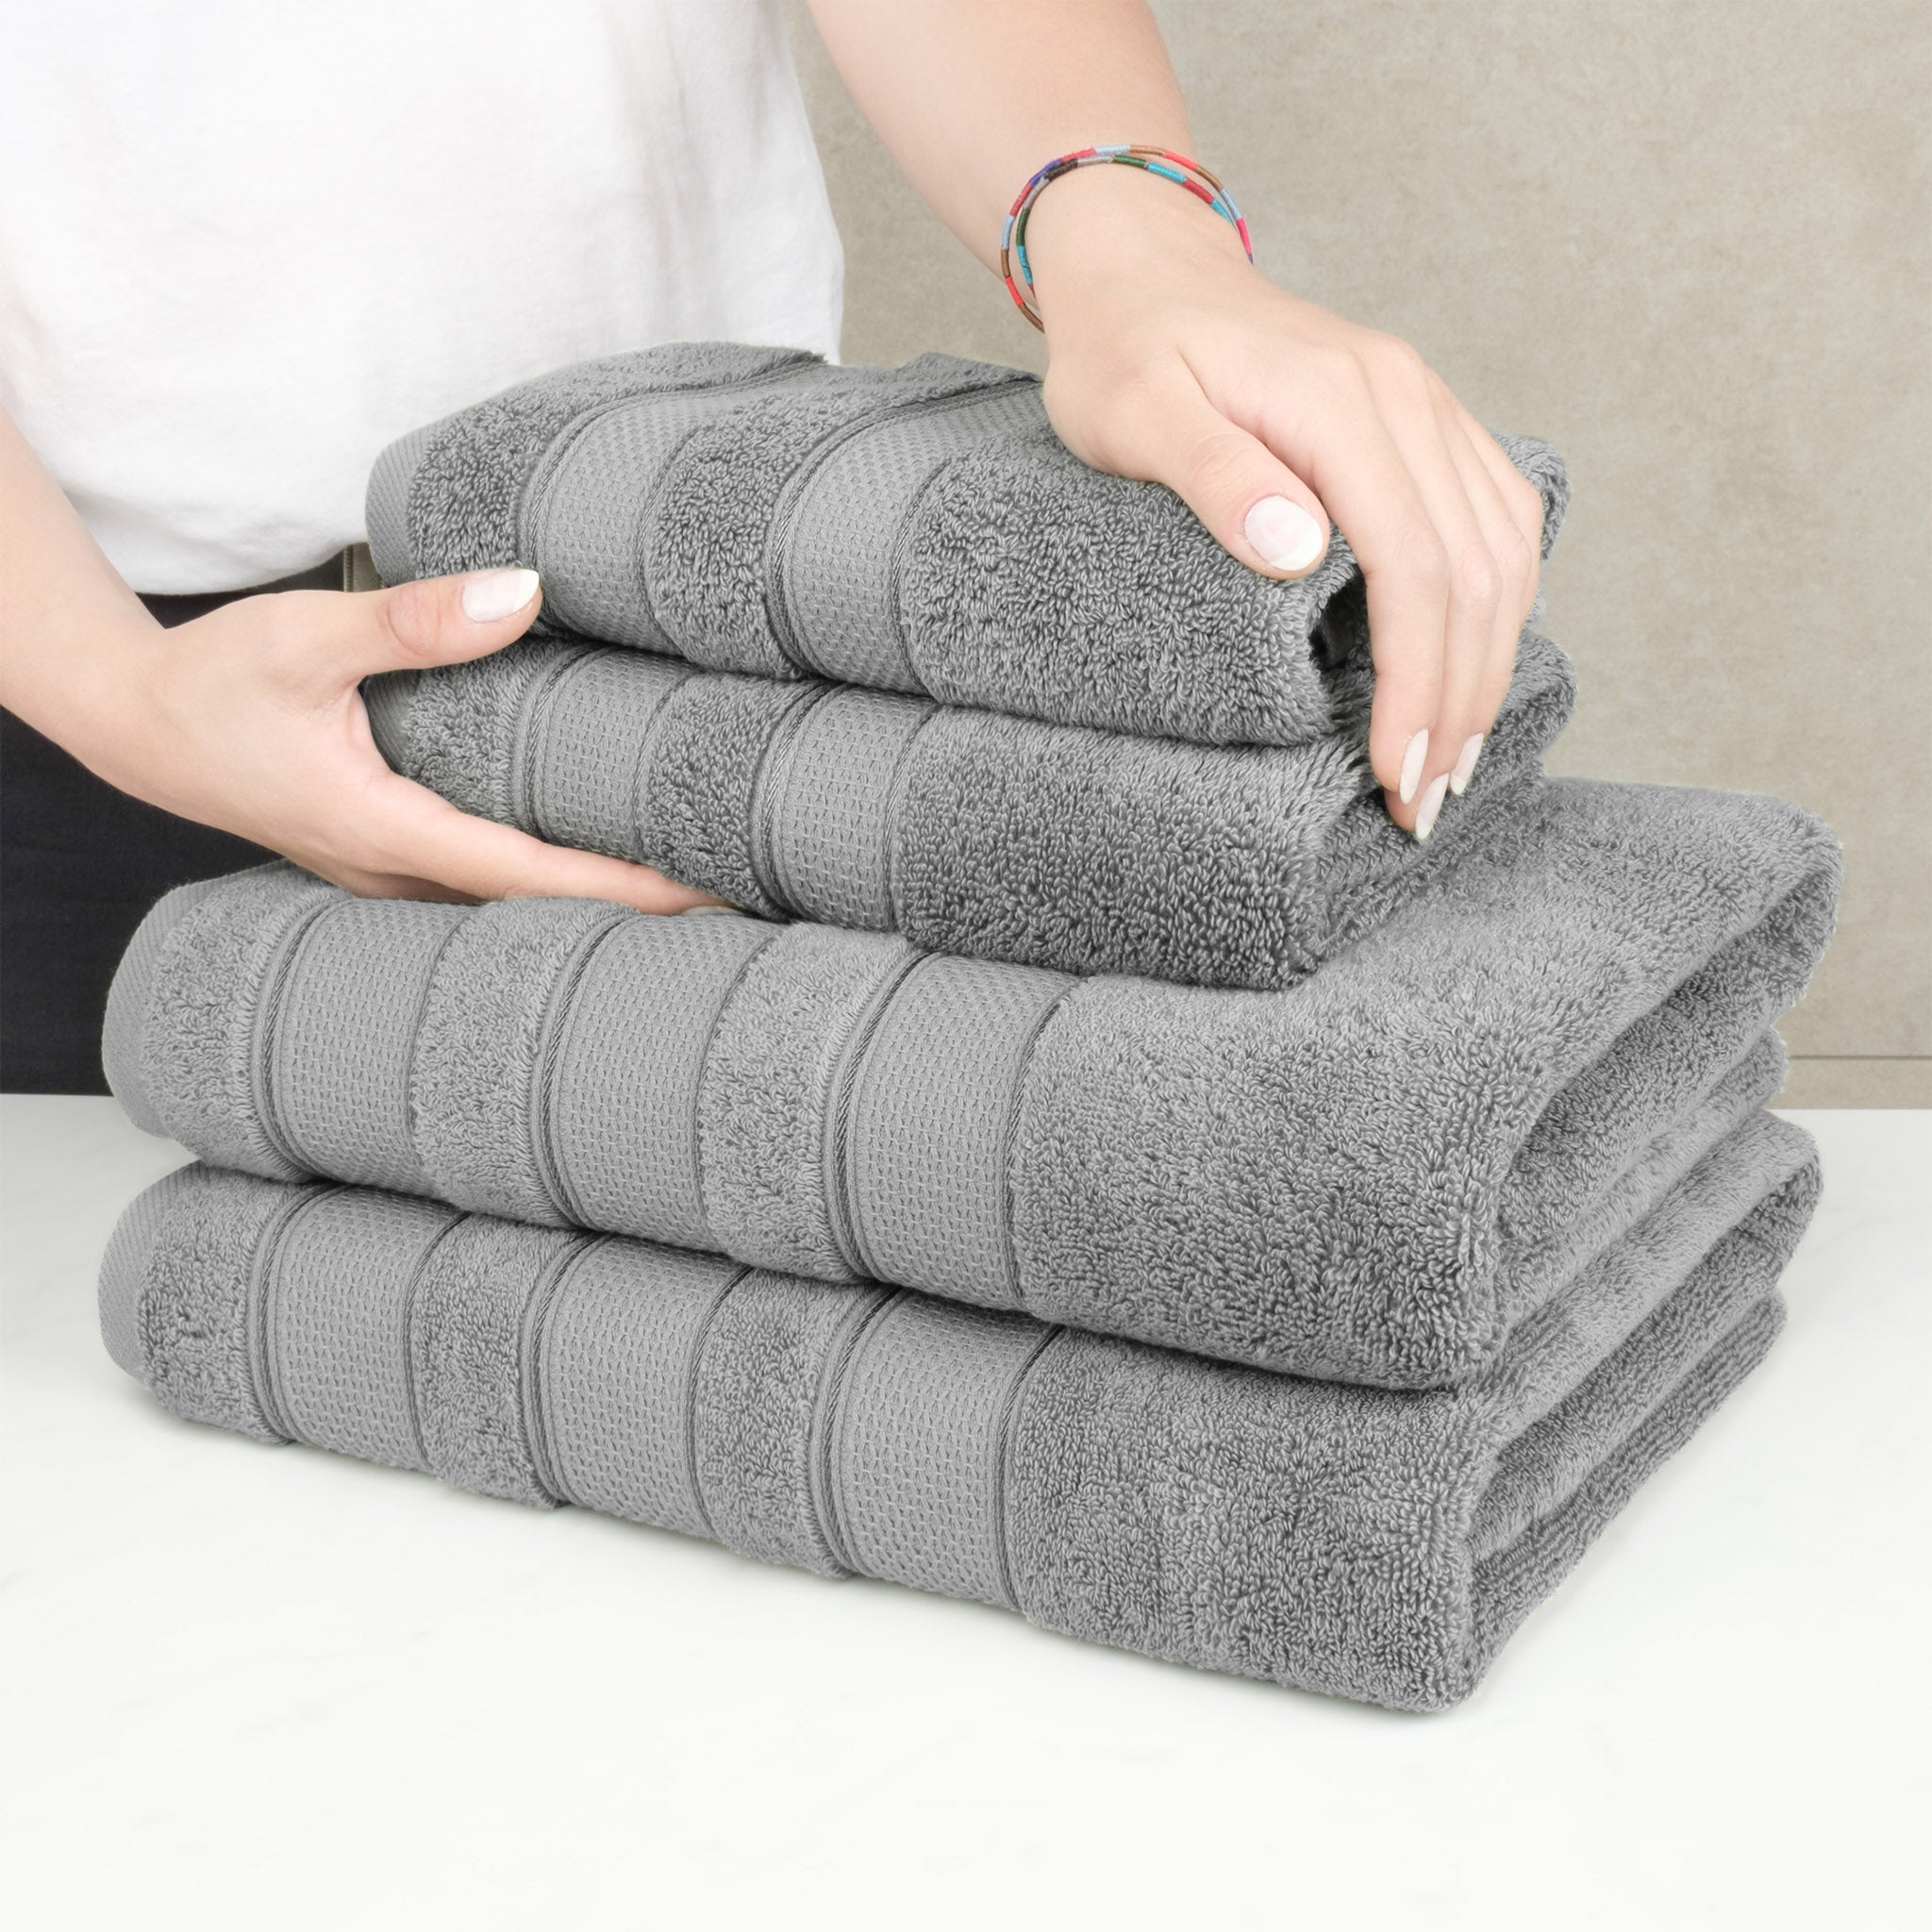 American Soft Linen Luxury Salem Collection, 6 Piece Bath Towel